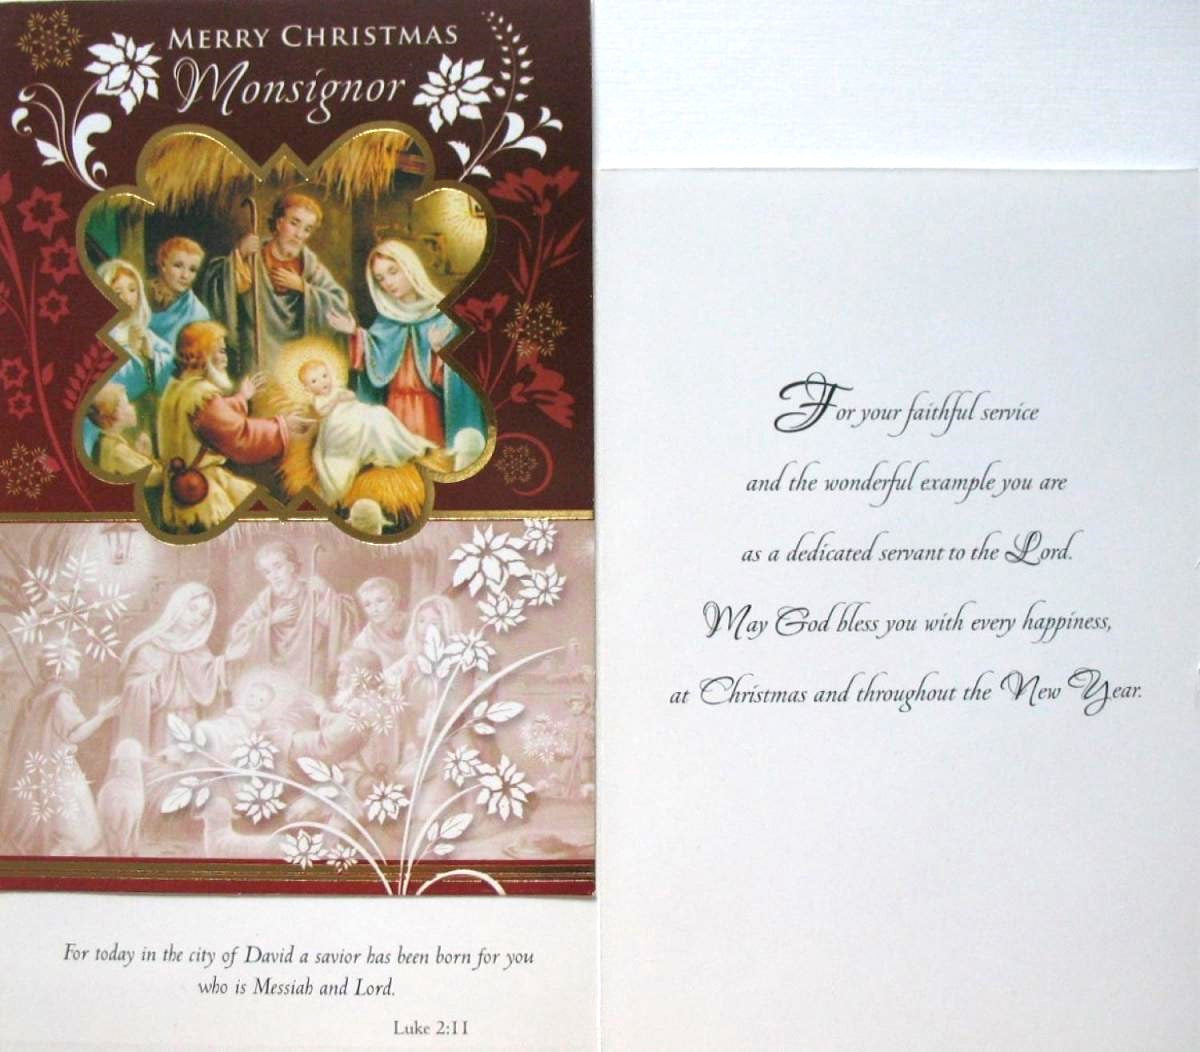 Christmas Greeting Card - To Monsignor